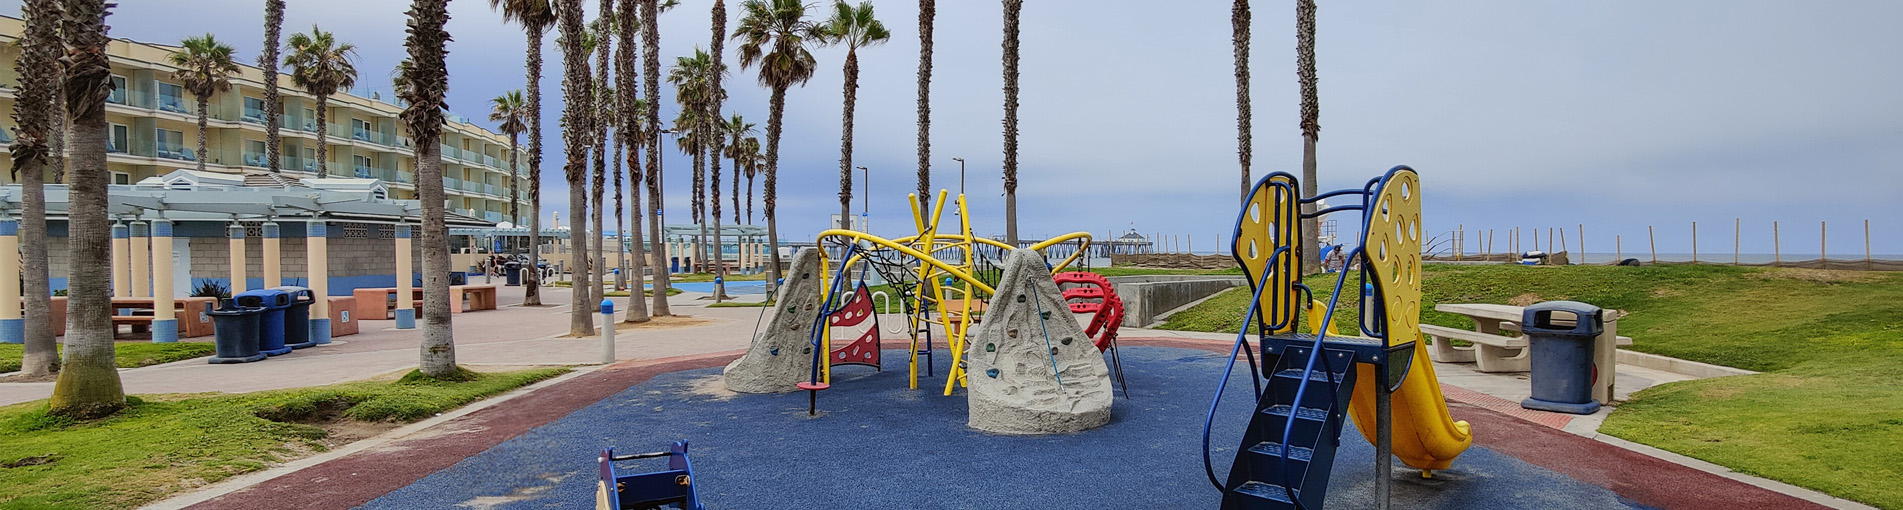 Imperial Beach Kids Playground